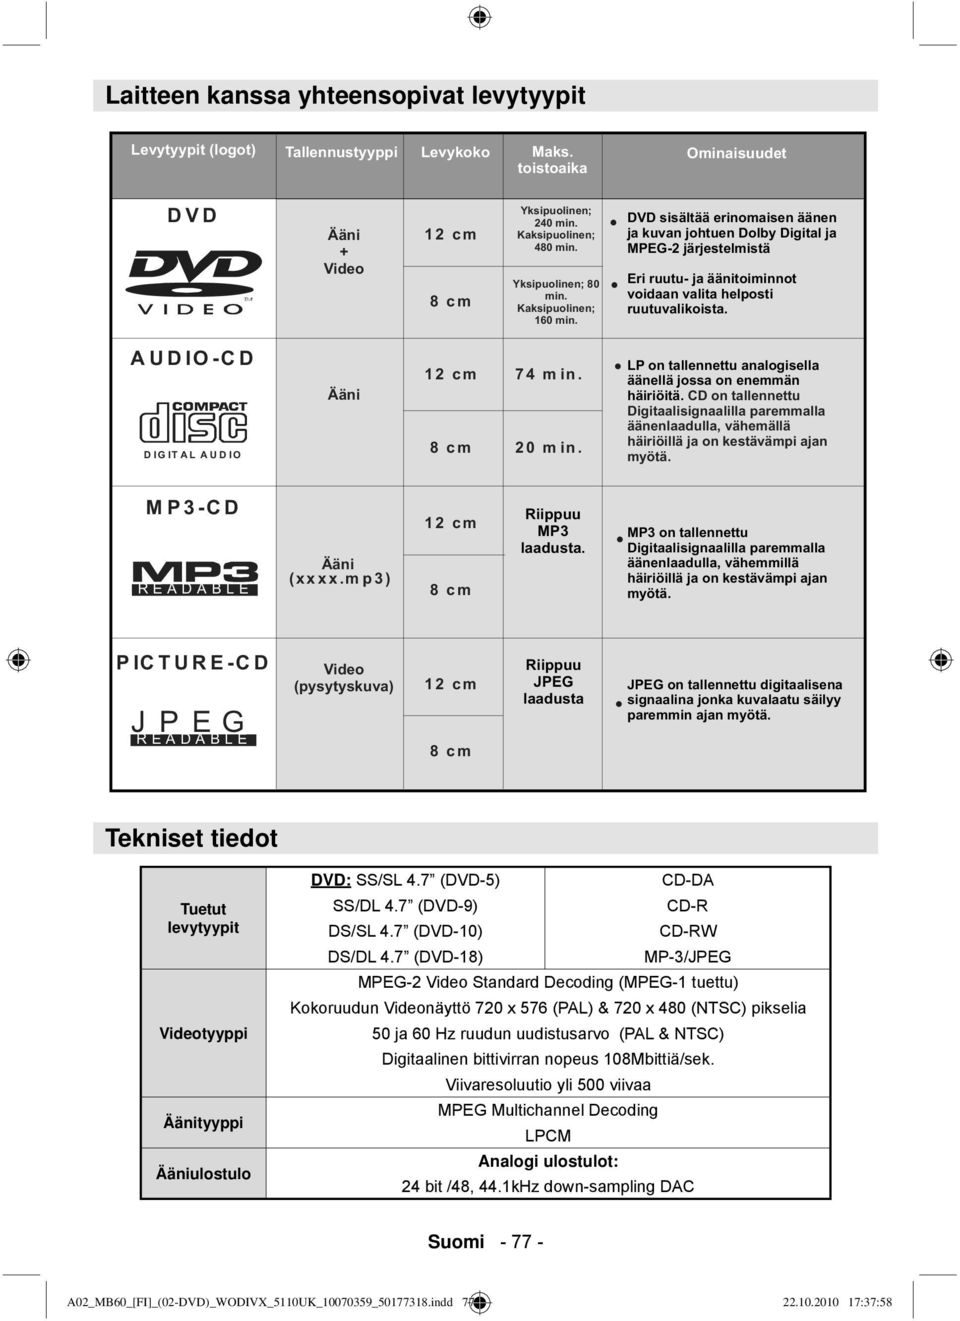 7 (DVD-18) MP-3/JPEG MPEG-2 Video Standard Decoding (MPEG-1 tuettu) Kokoruudun Videonäyttö 720 x 576 (PAL) & 720 x 480 (NTSC) pikselia 50 ja 60 Hz ruudun